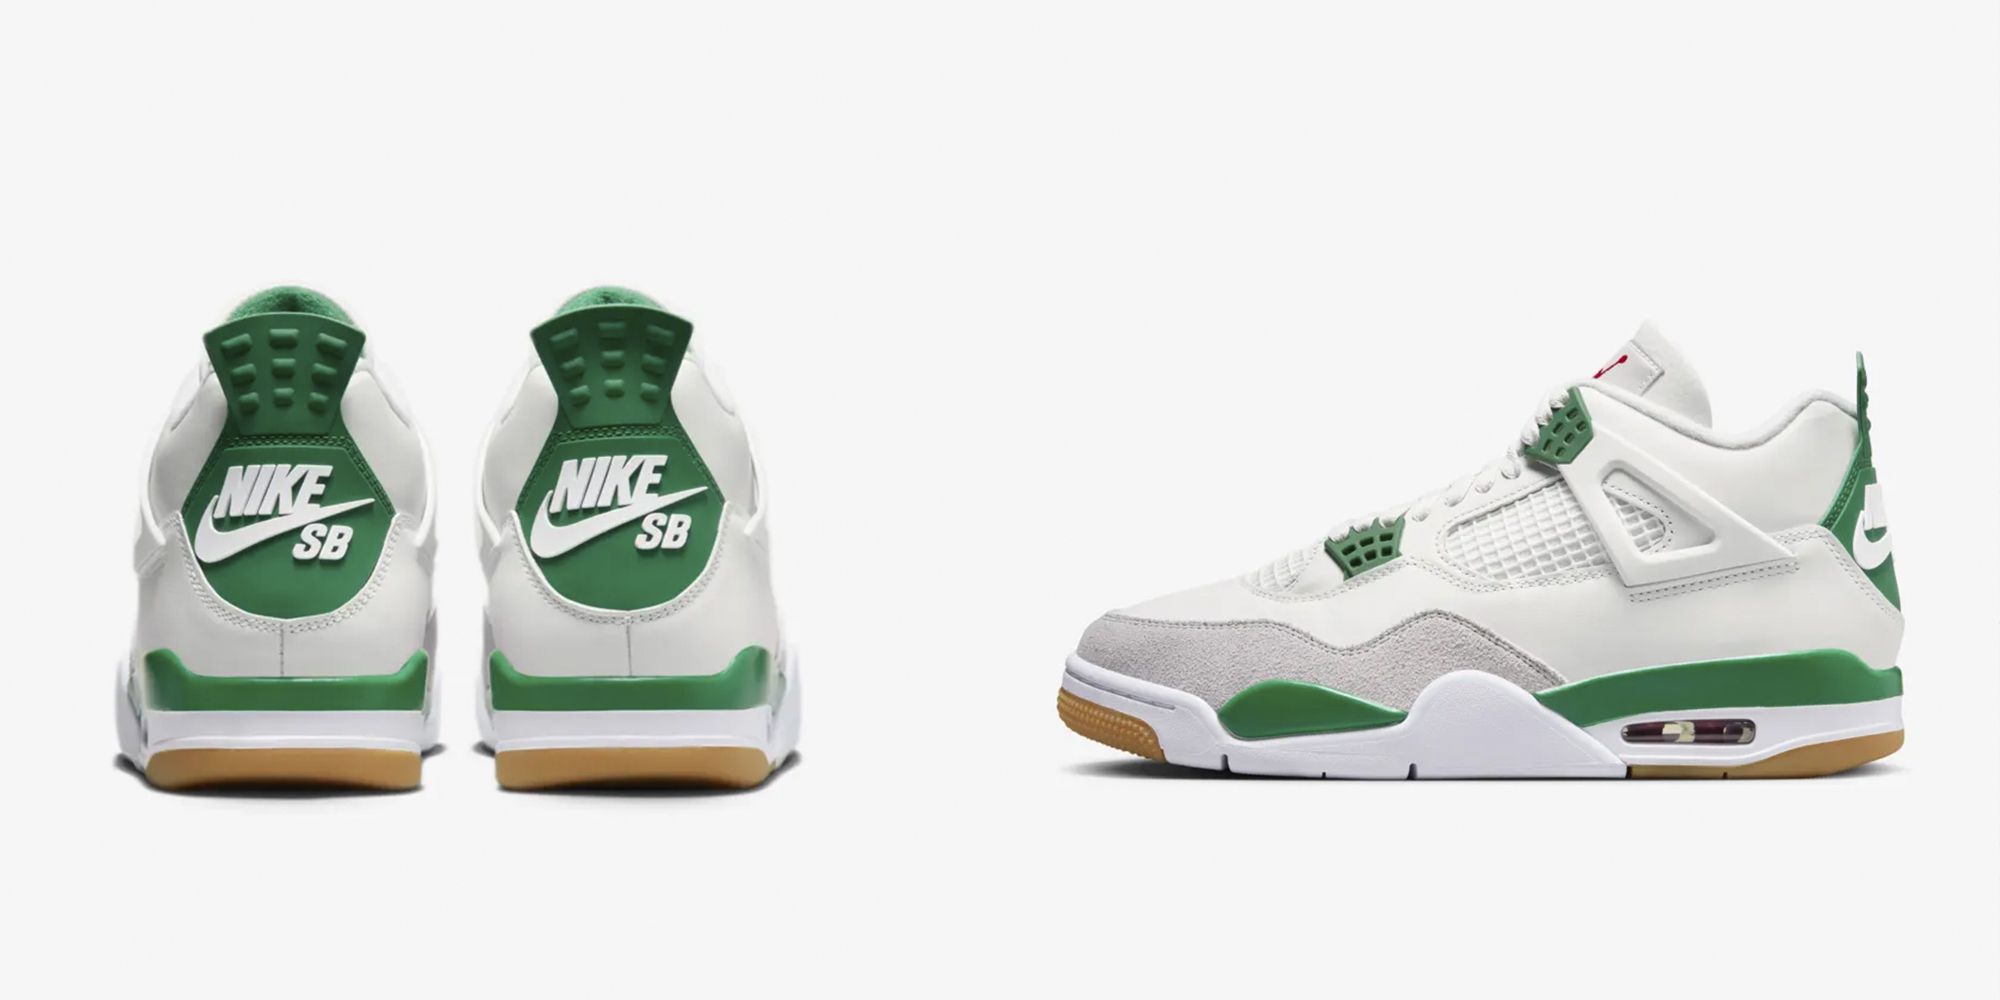 How to Buy the Nike SB X Air Jordan 4 'Pine Green' Sneaker